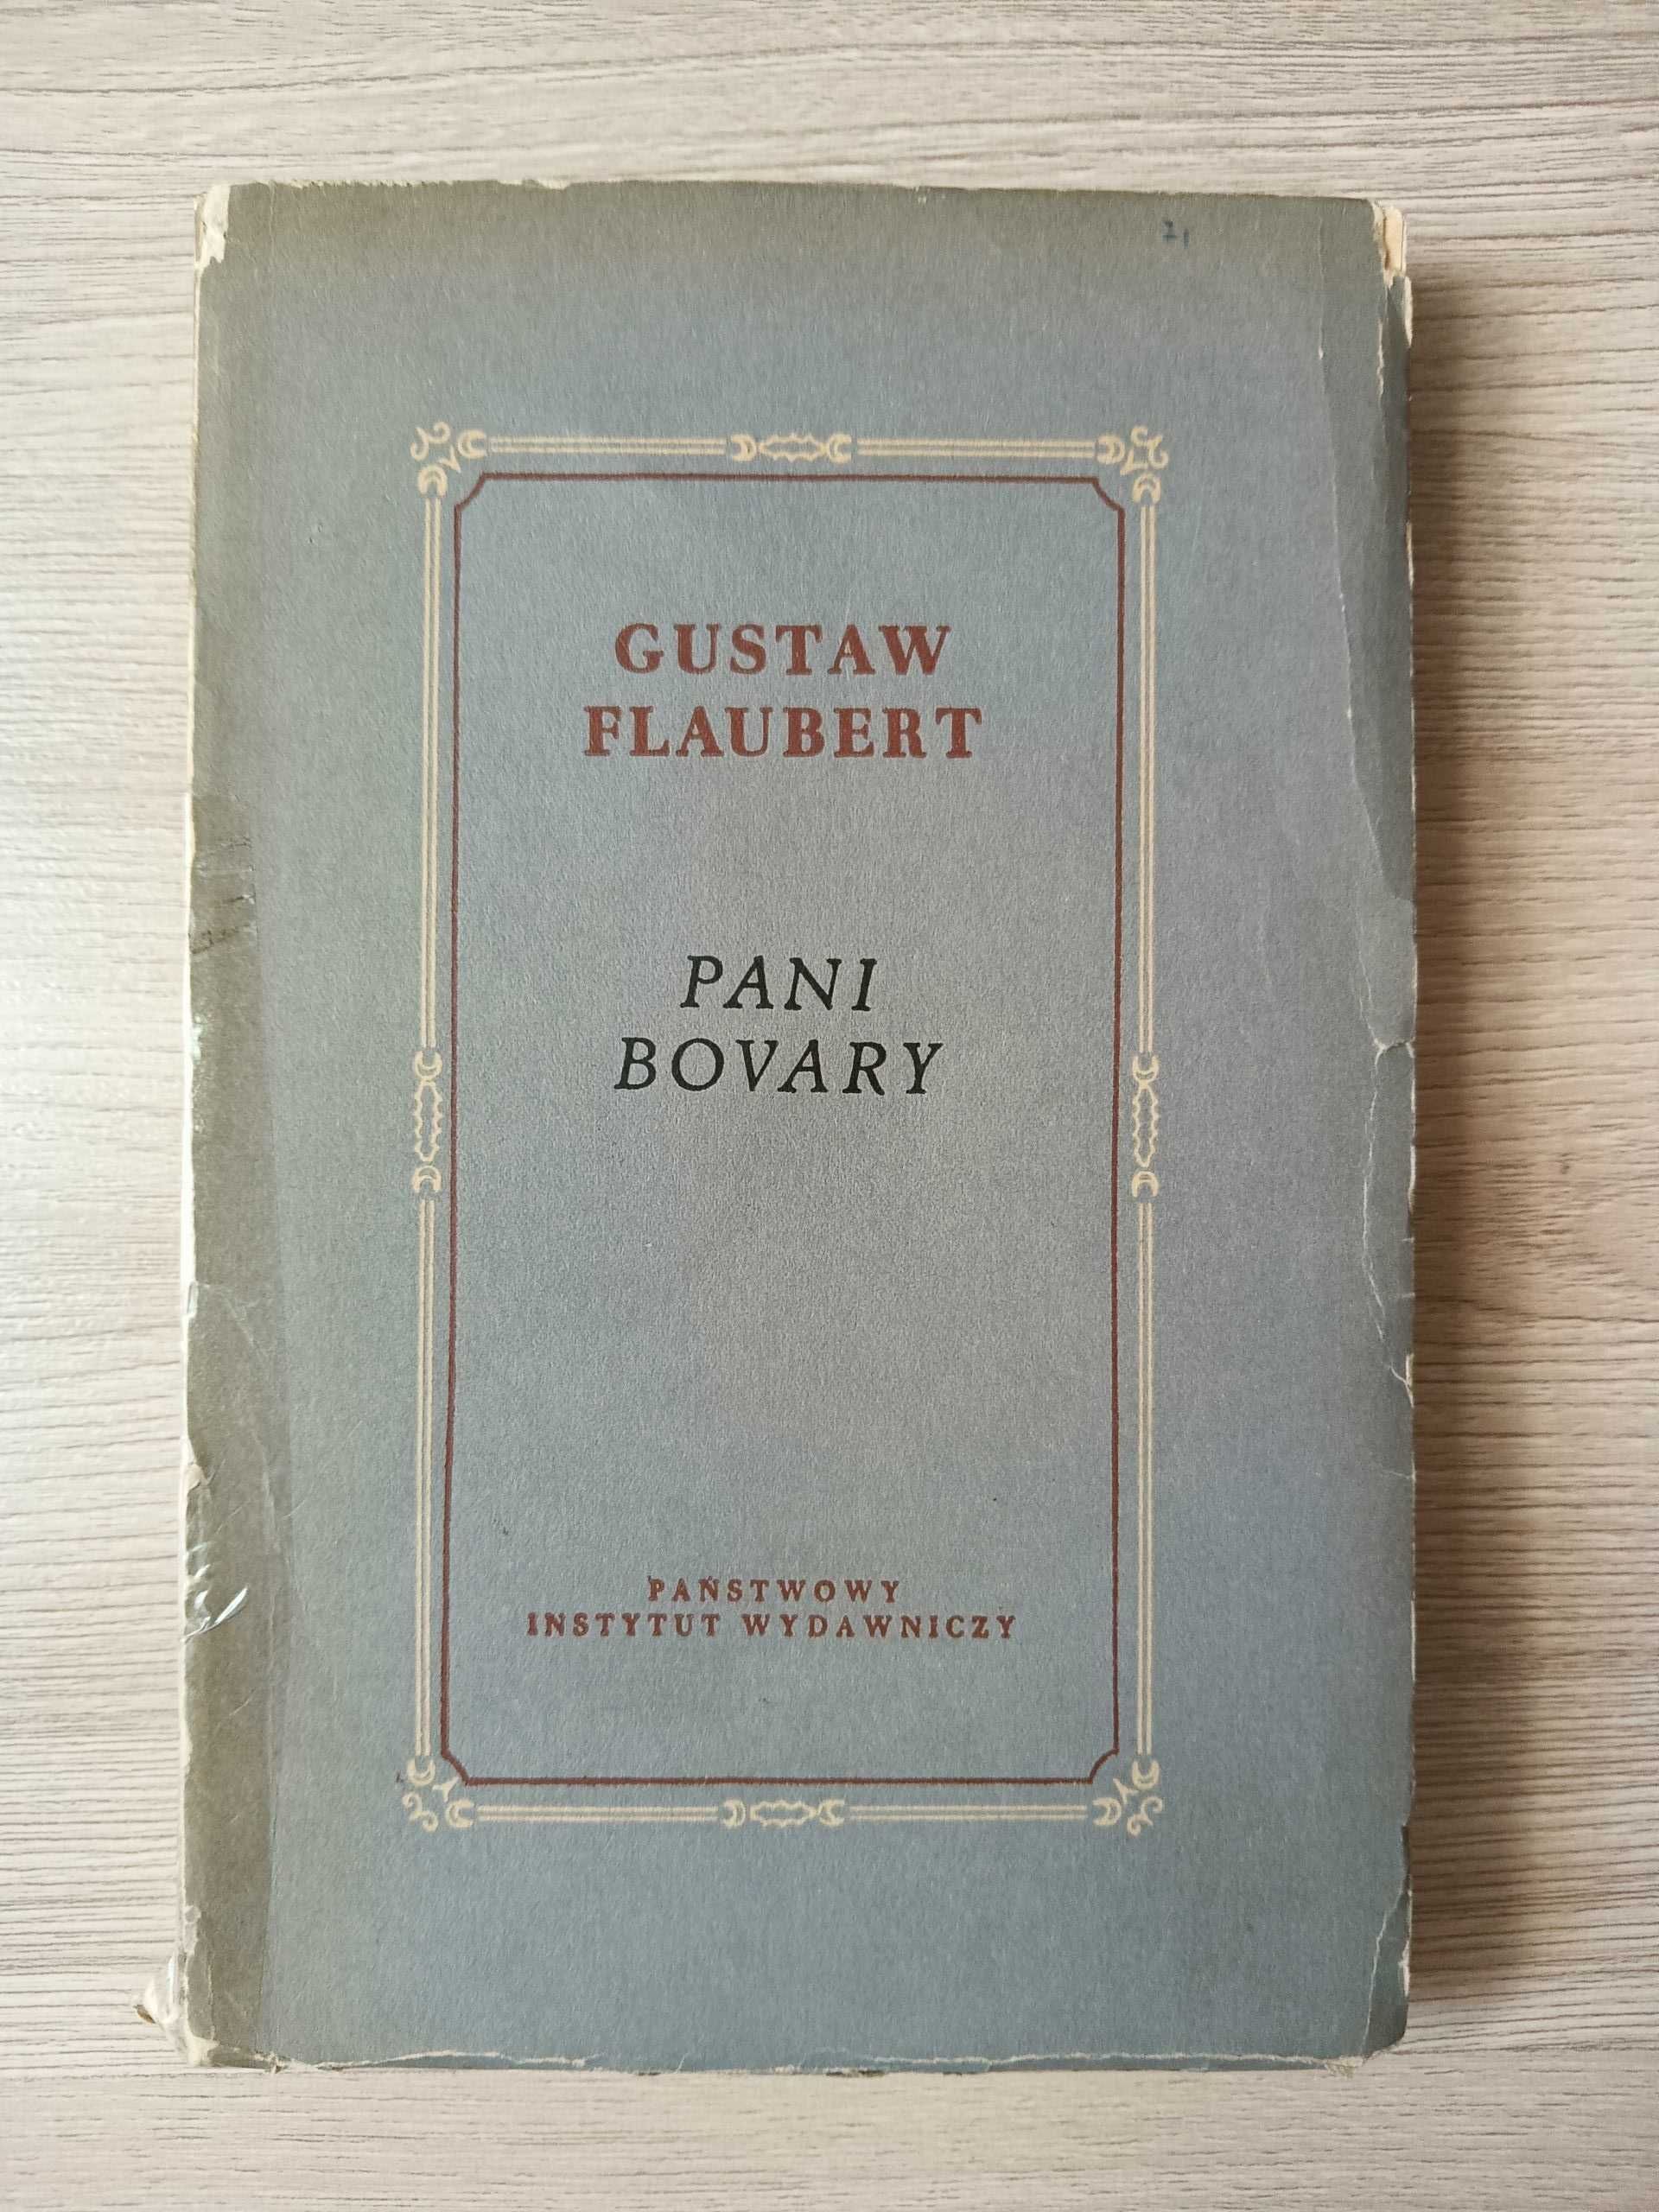 Pani Bovary - Gustaw Flaubert 1955